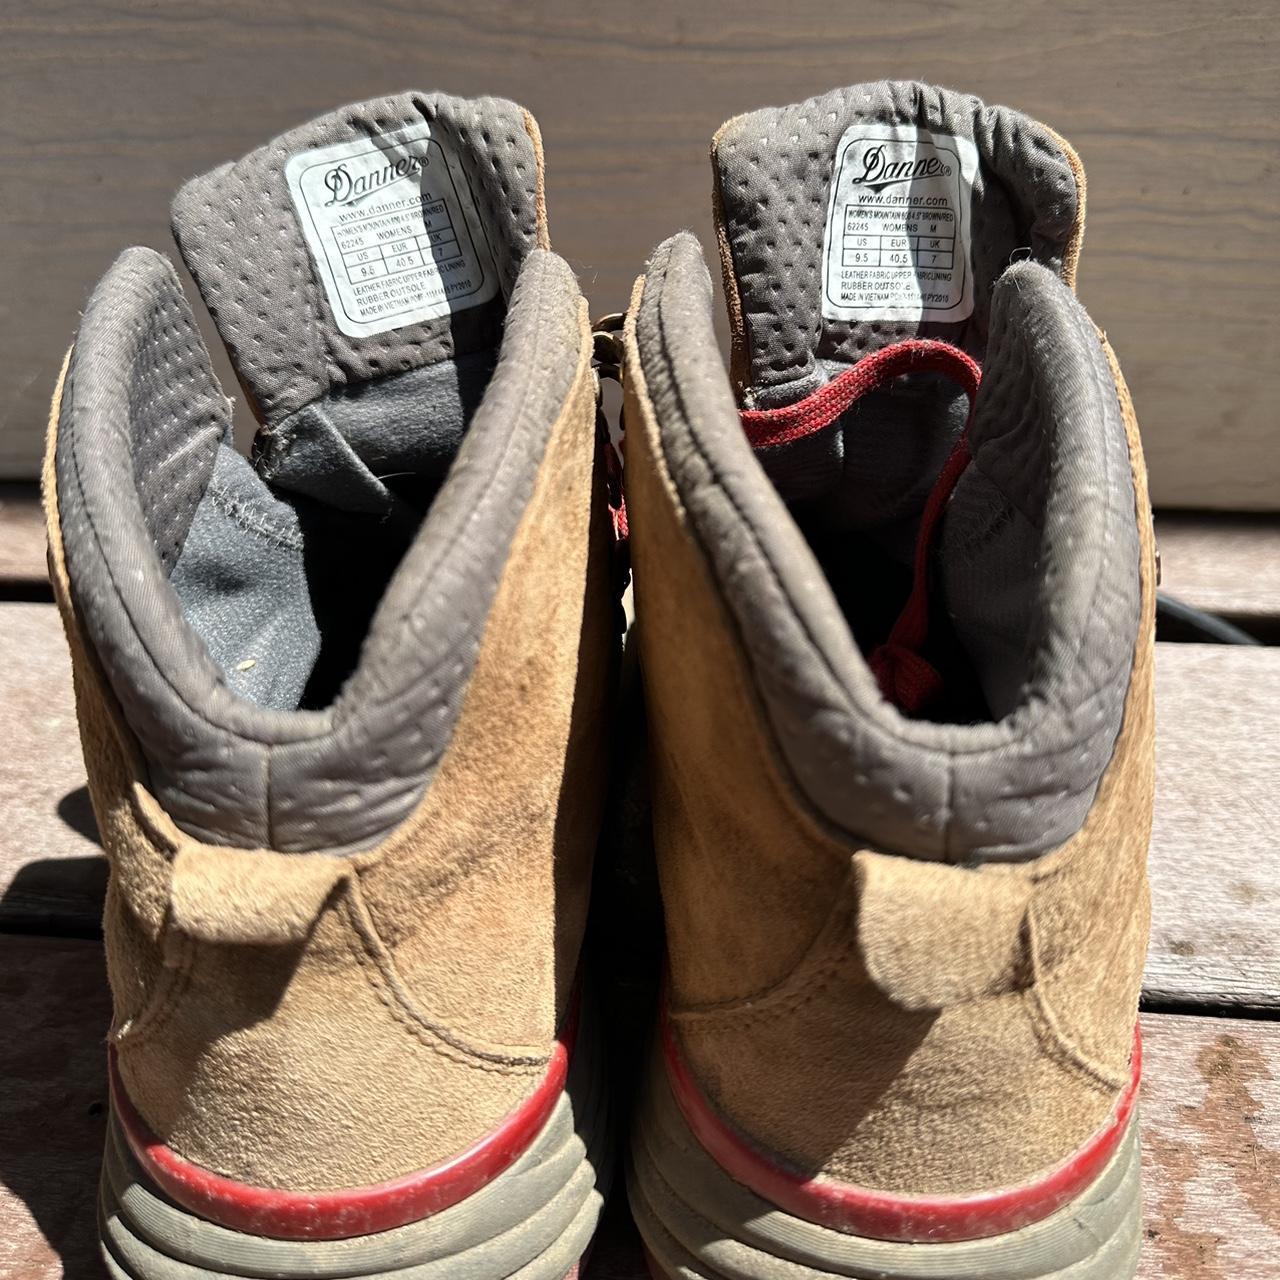 Danner Hiking Boots Original price 190 Lightly worn!!! - Depop